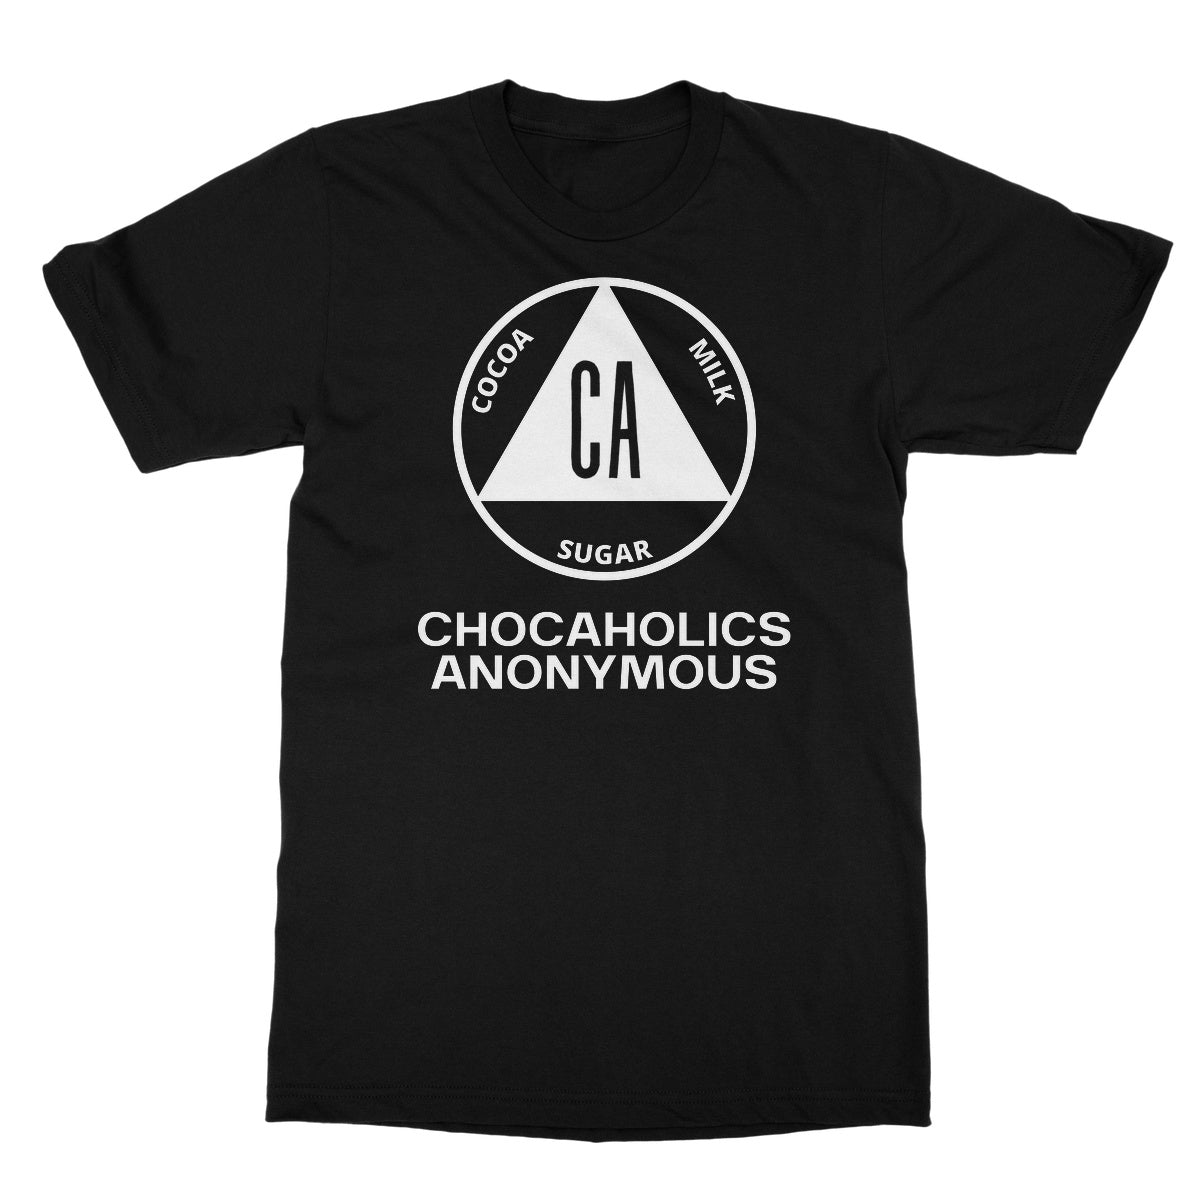 chocaholics anonymous t shirt black